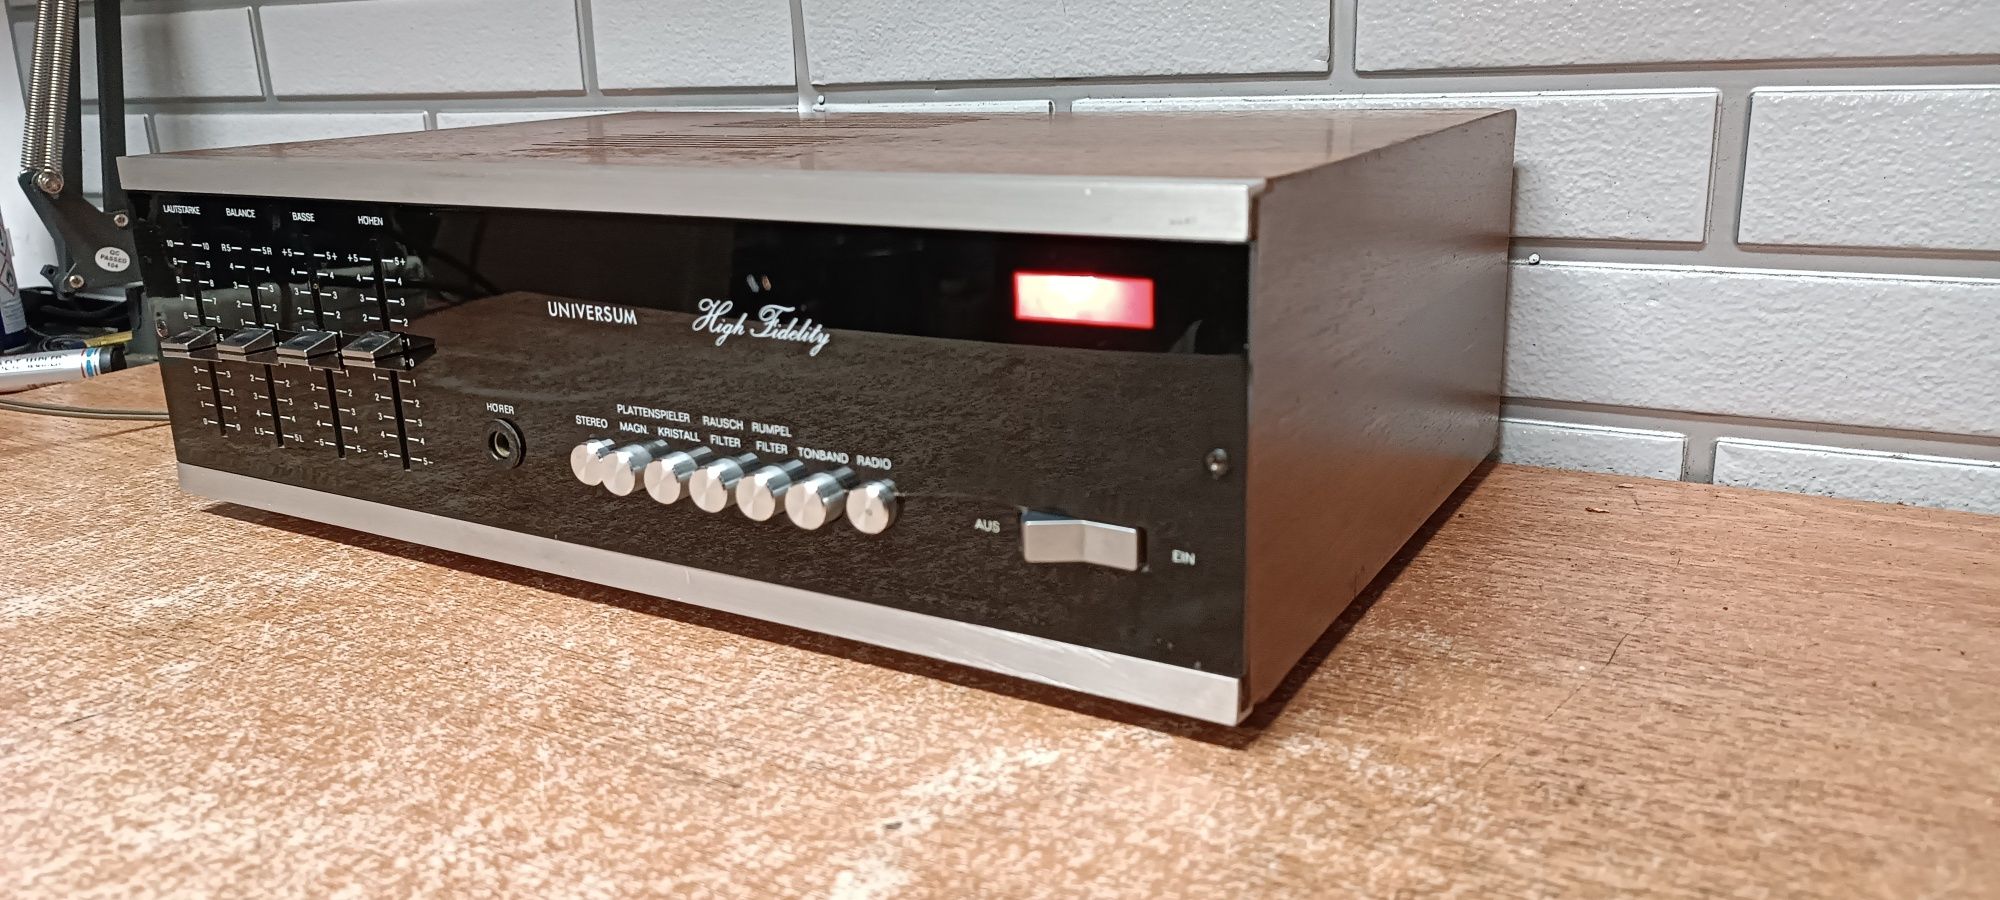 Wzmacniacz hi-fi stereo UNIVERSUM V-716 High Fidelity